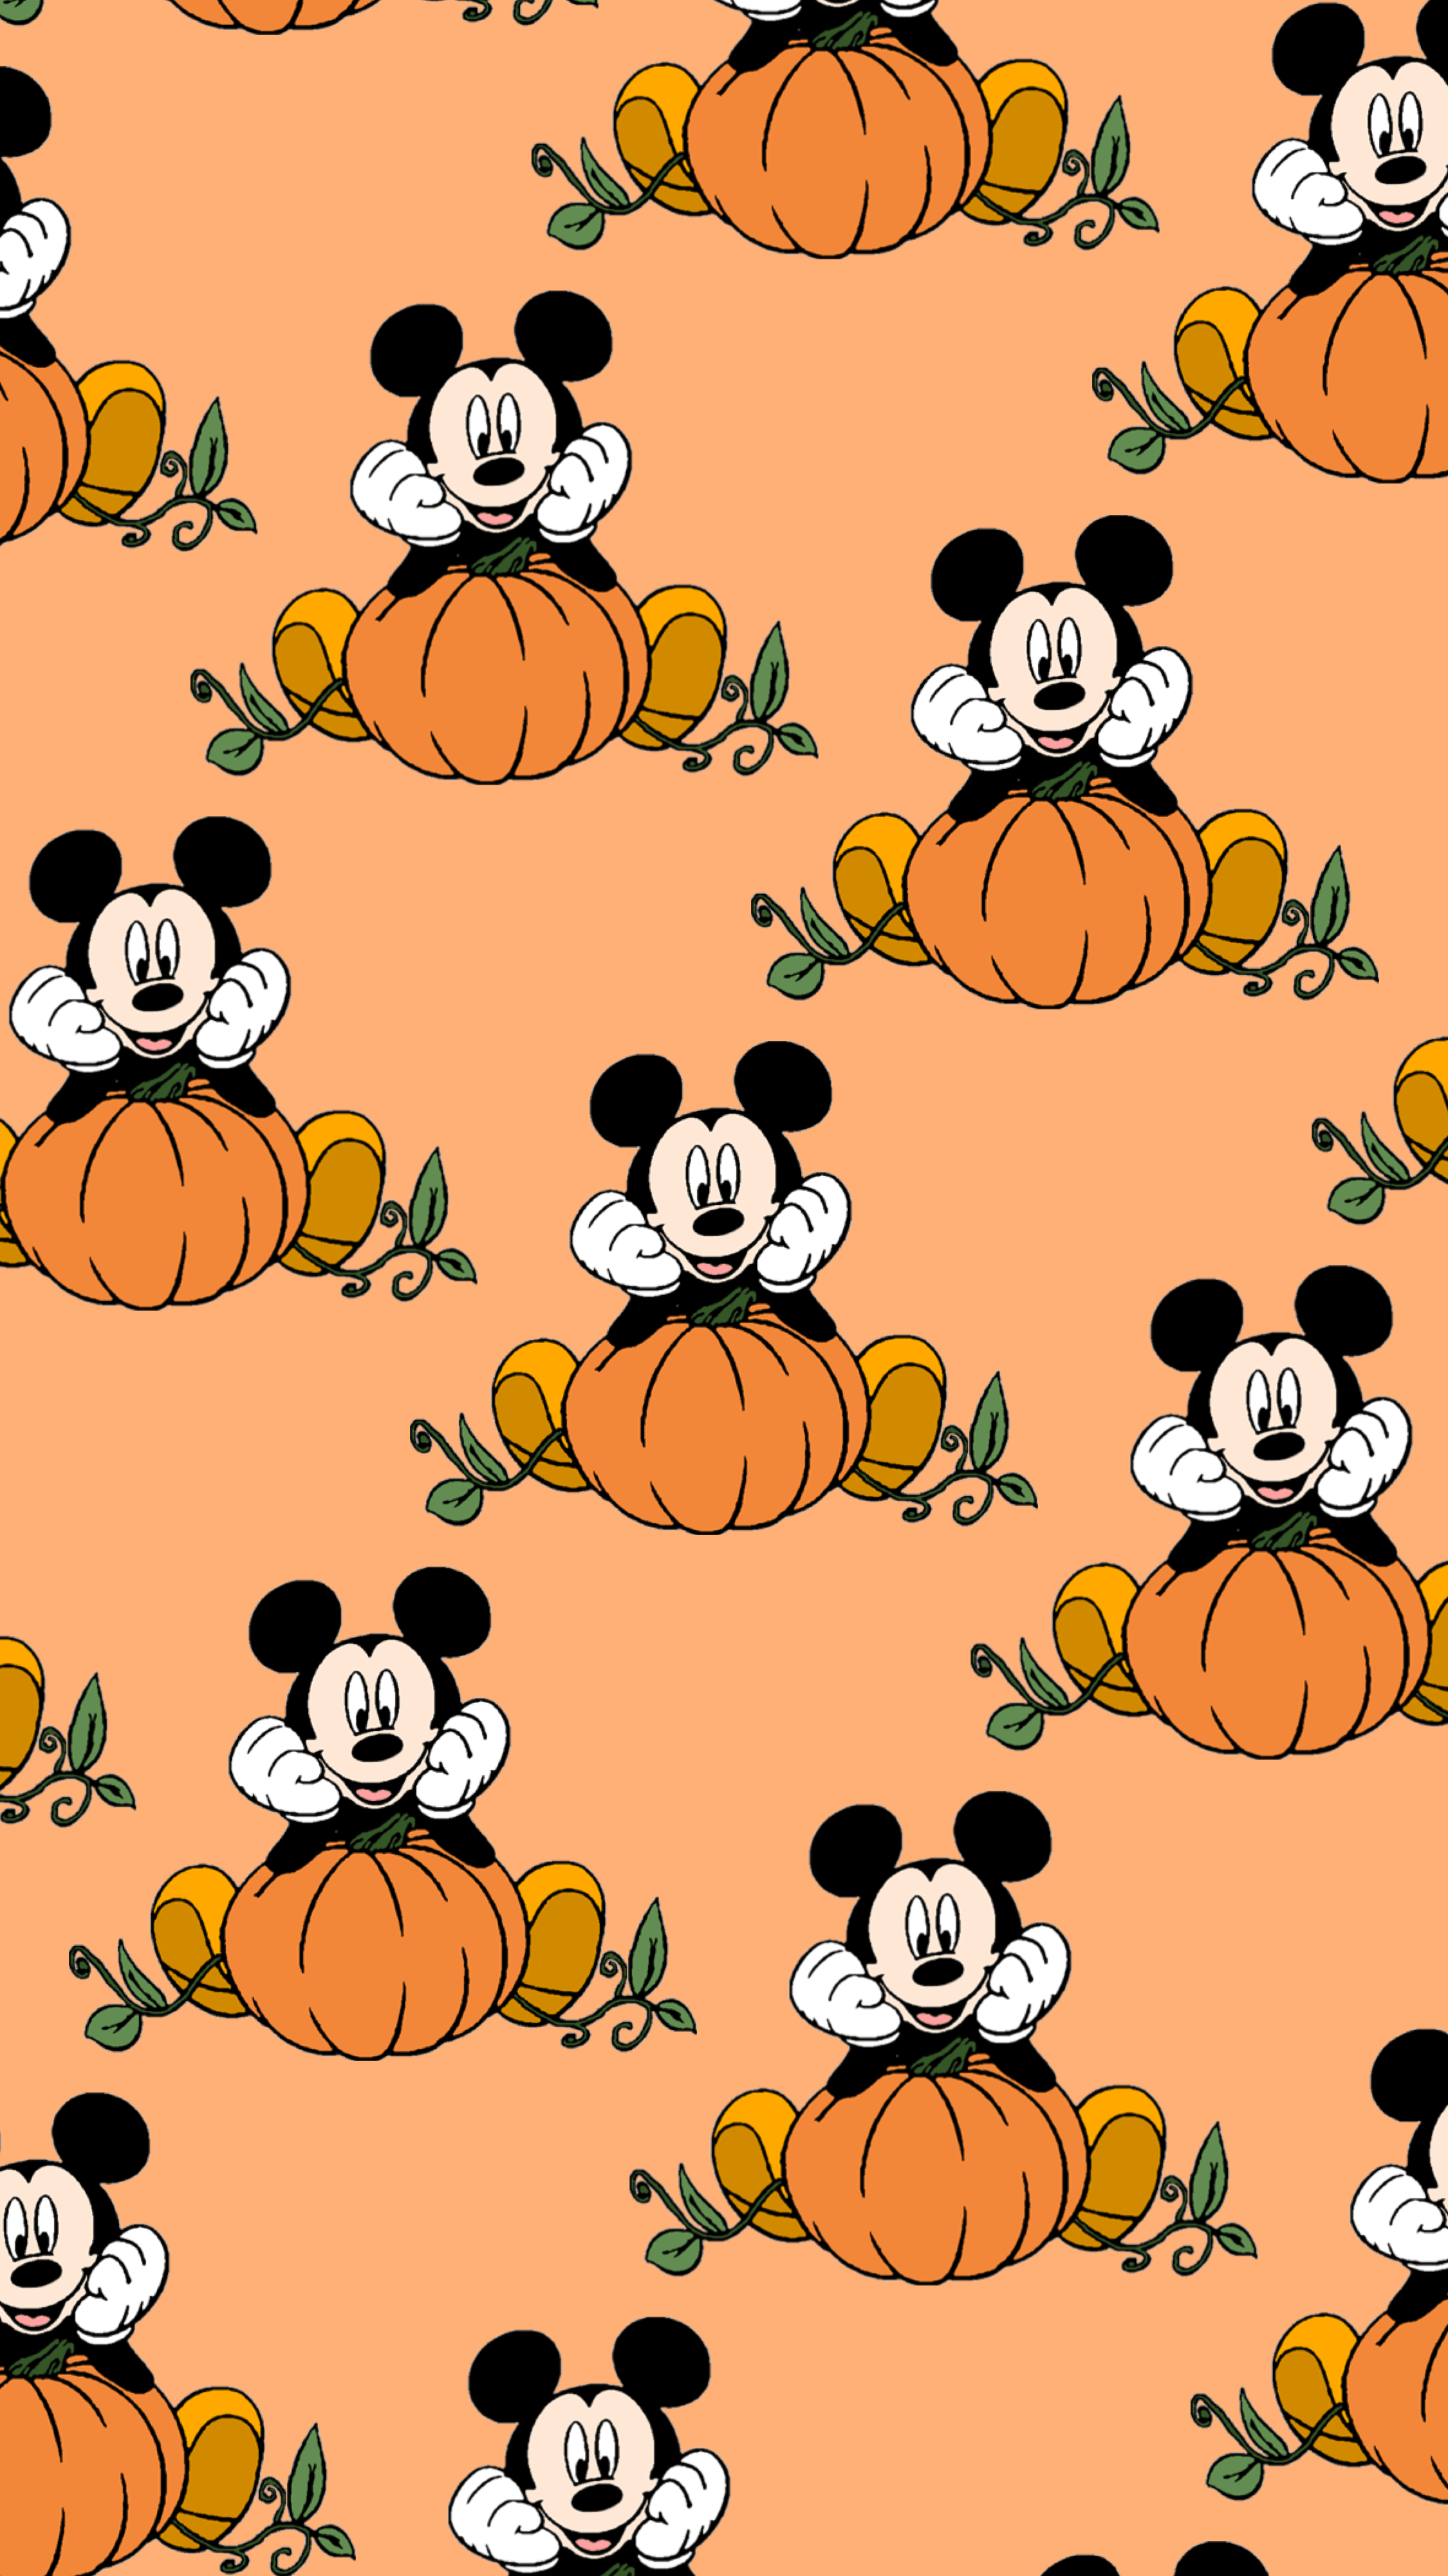 Minnie's Wallpaper of Mickey. Fall wallpaper, iPhone wallpaper fall, Disney wallpaper